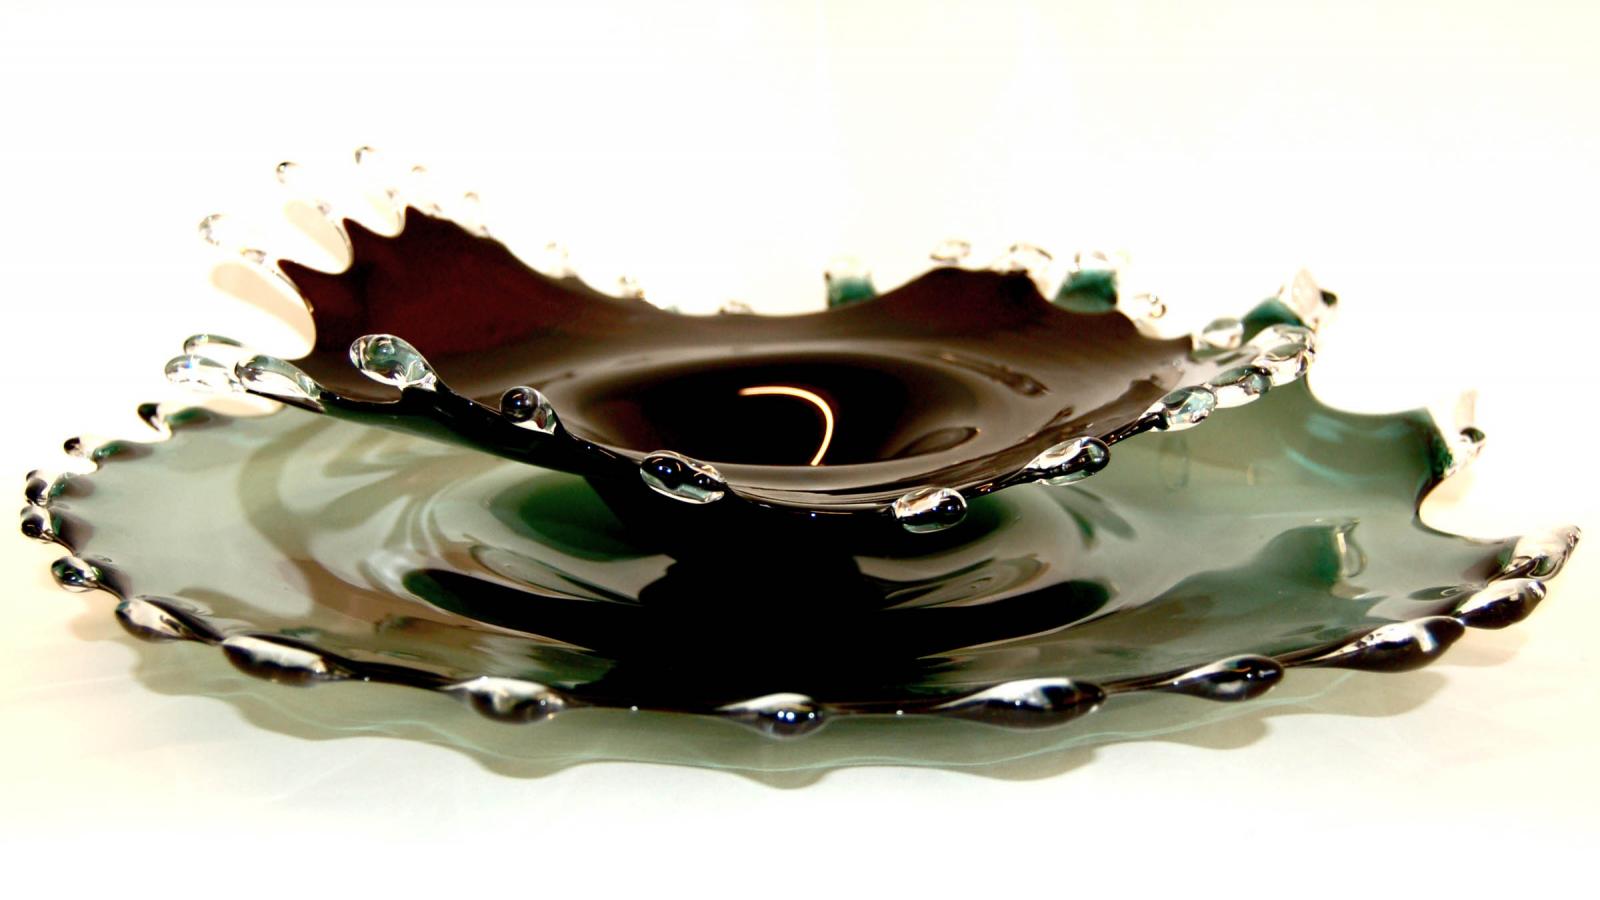 Charlotte Sale, Splash Platters, Blown Glass, 2008-2009, Hawk Galleries